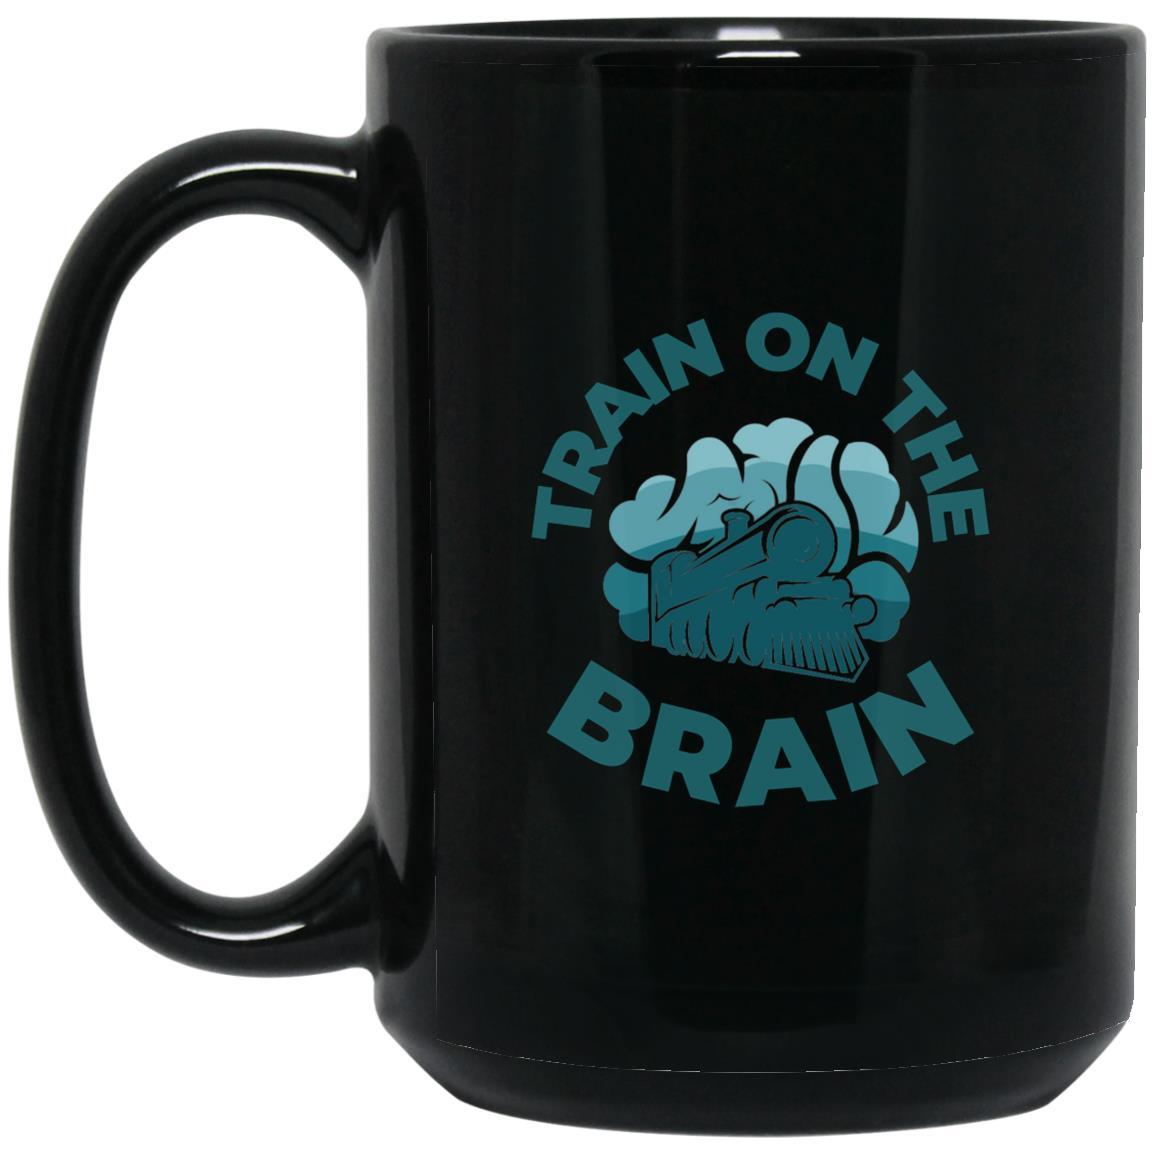 Train on the Brain 15 oz. Black Mug - Broken Knuckle Apparel